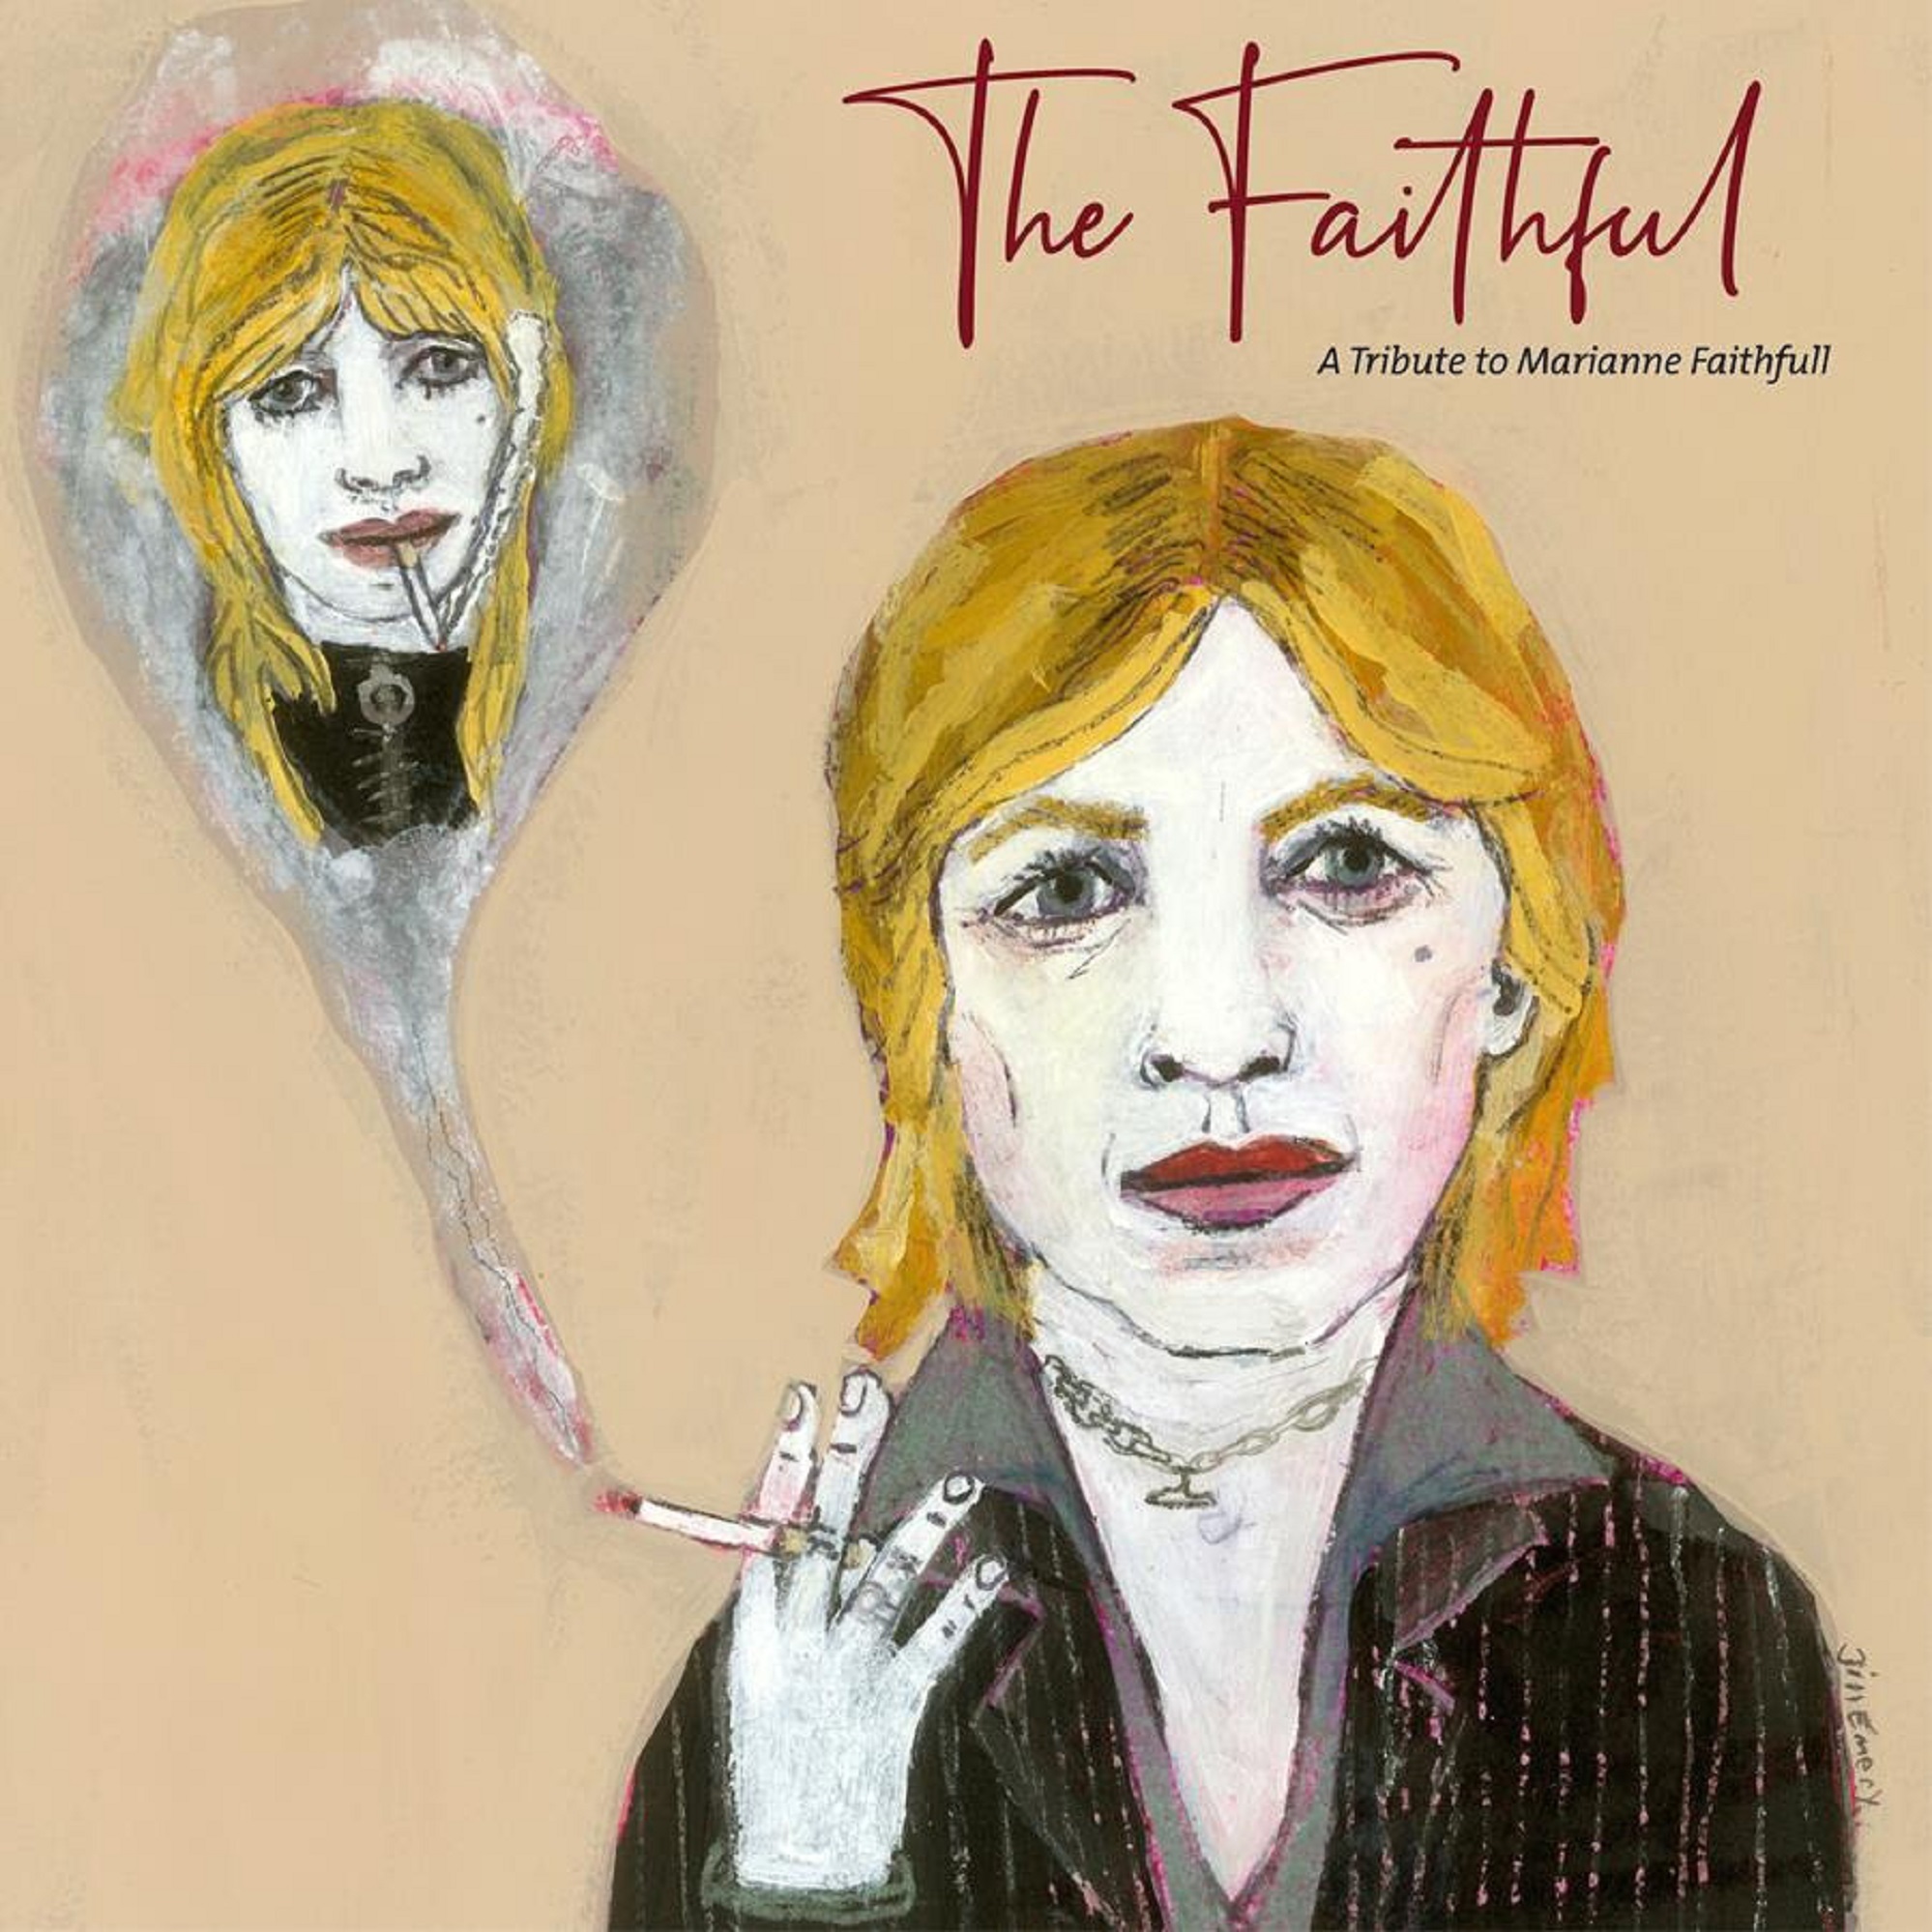 Marianne Faithfull tribute / benefit album, The Faithful, announced feat. Cat Power w/ Iggy Pop